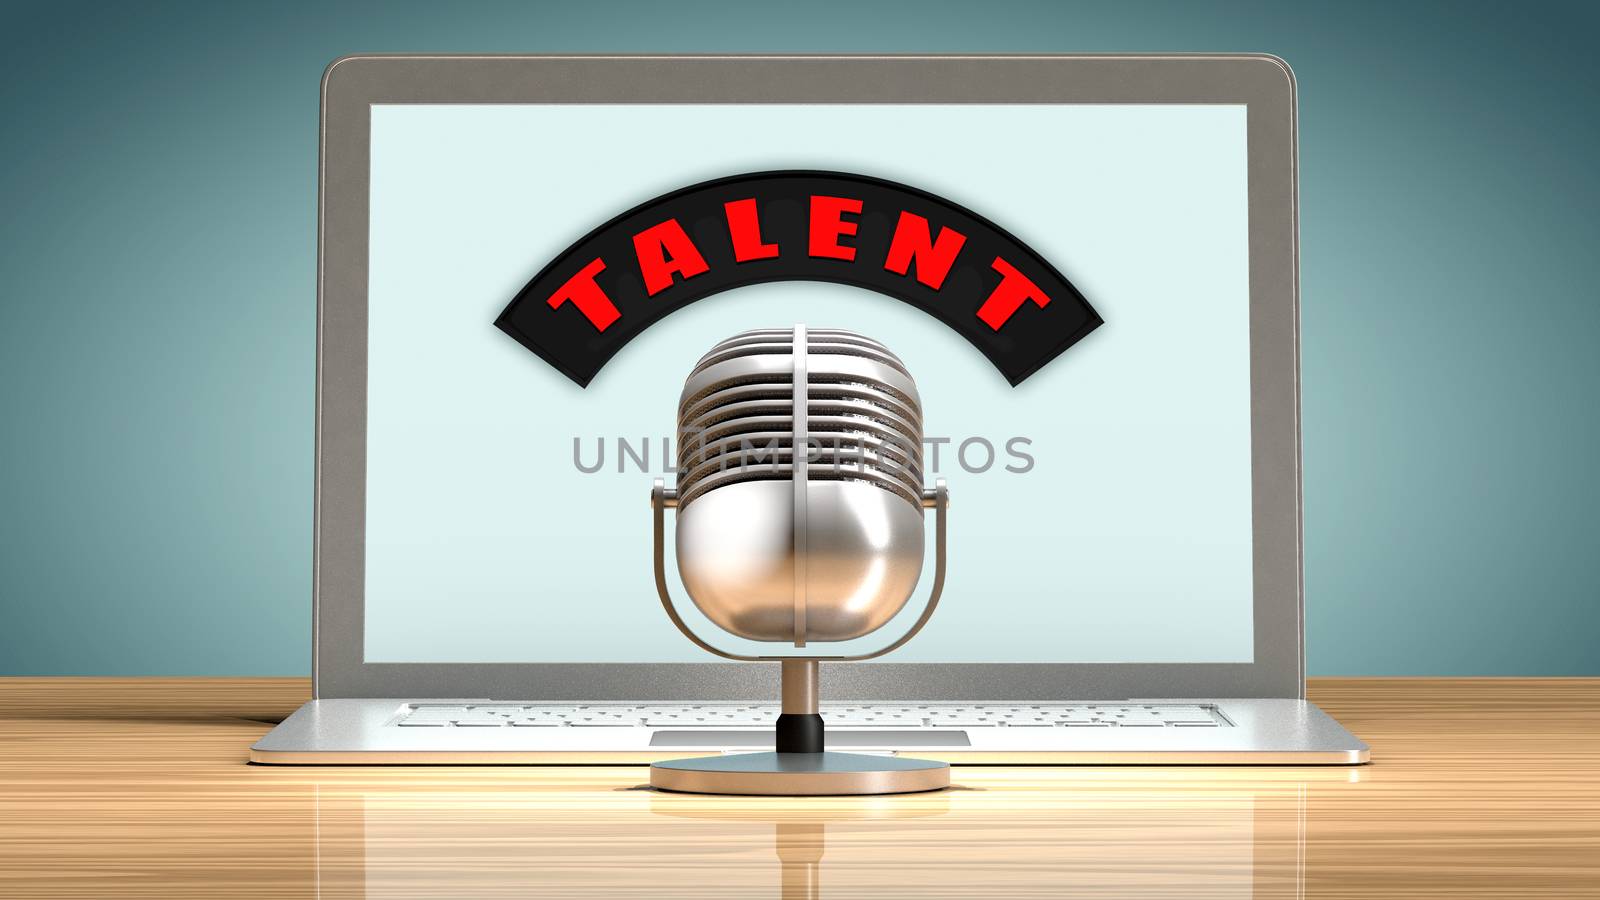 Talent recruitment through the internet by ytjo